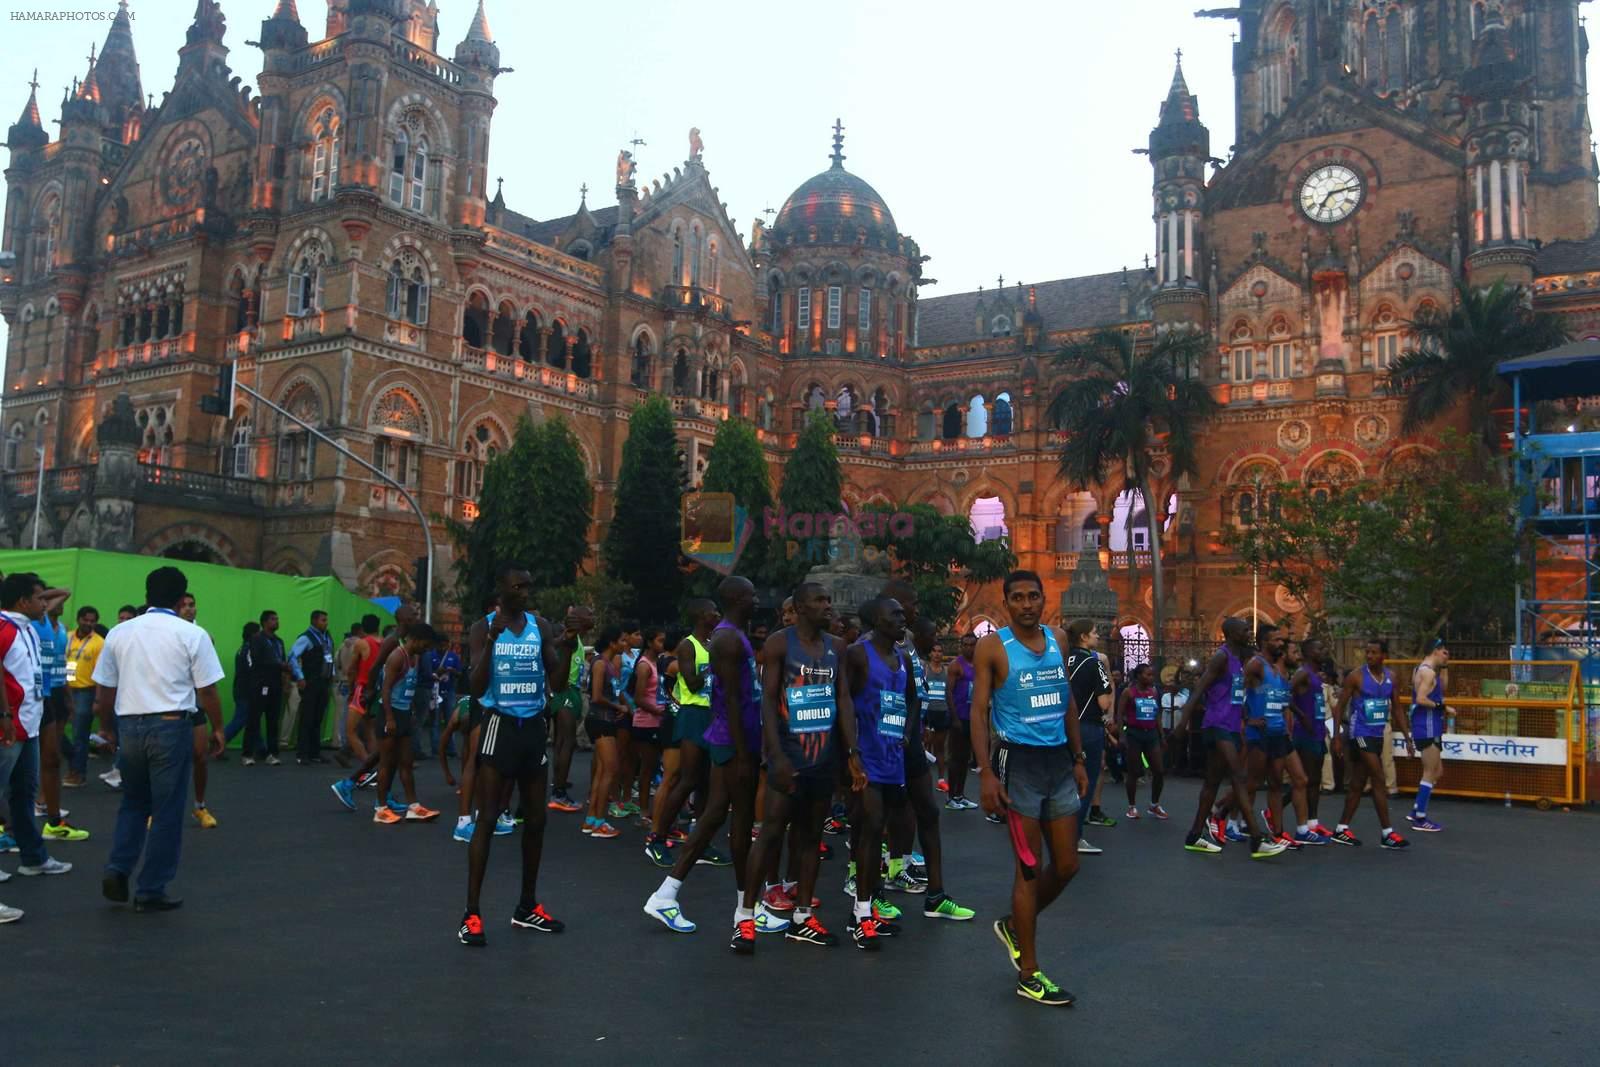 at Mumbai marathon on 17th Jan 2016